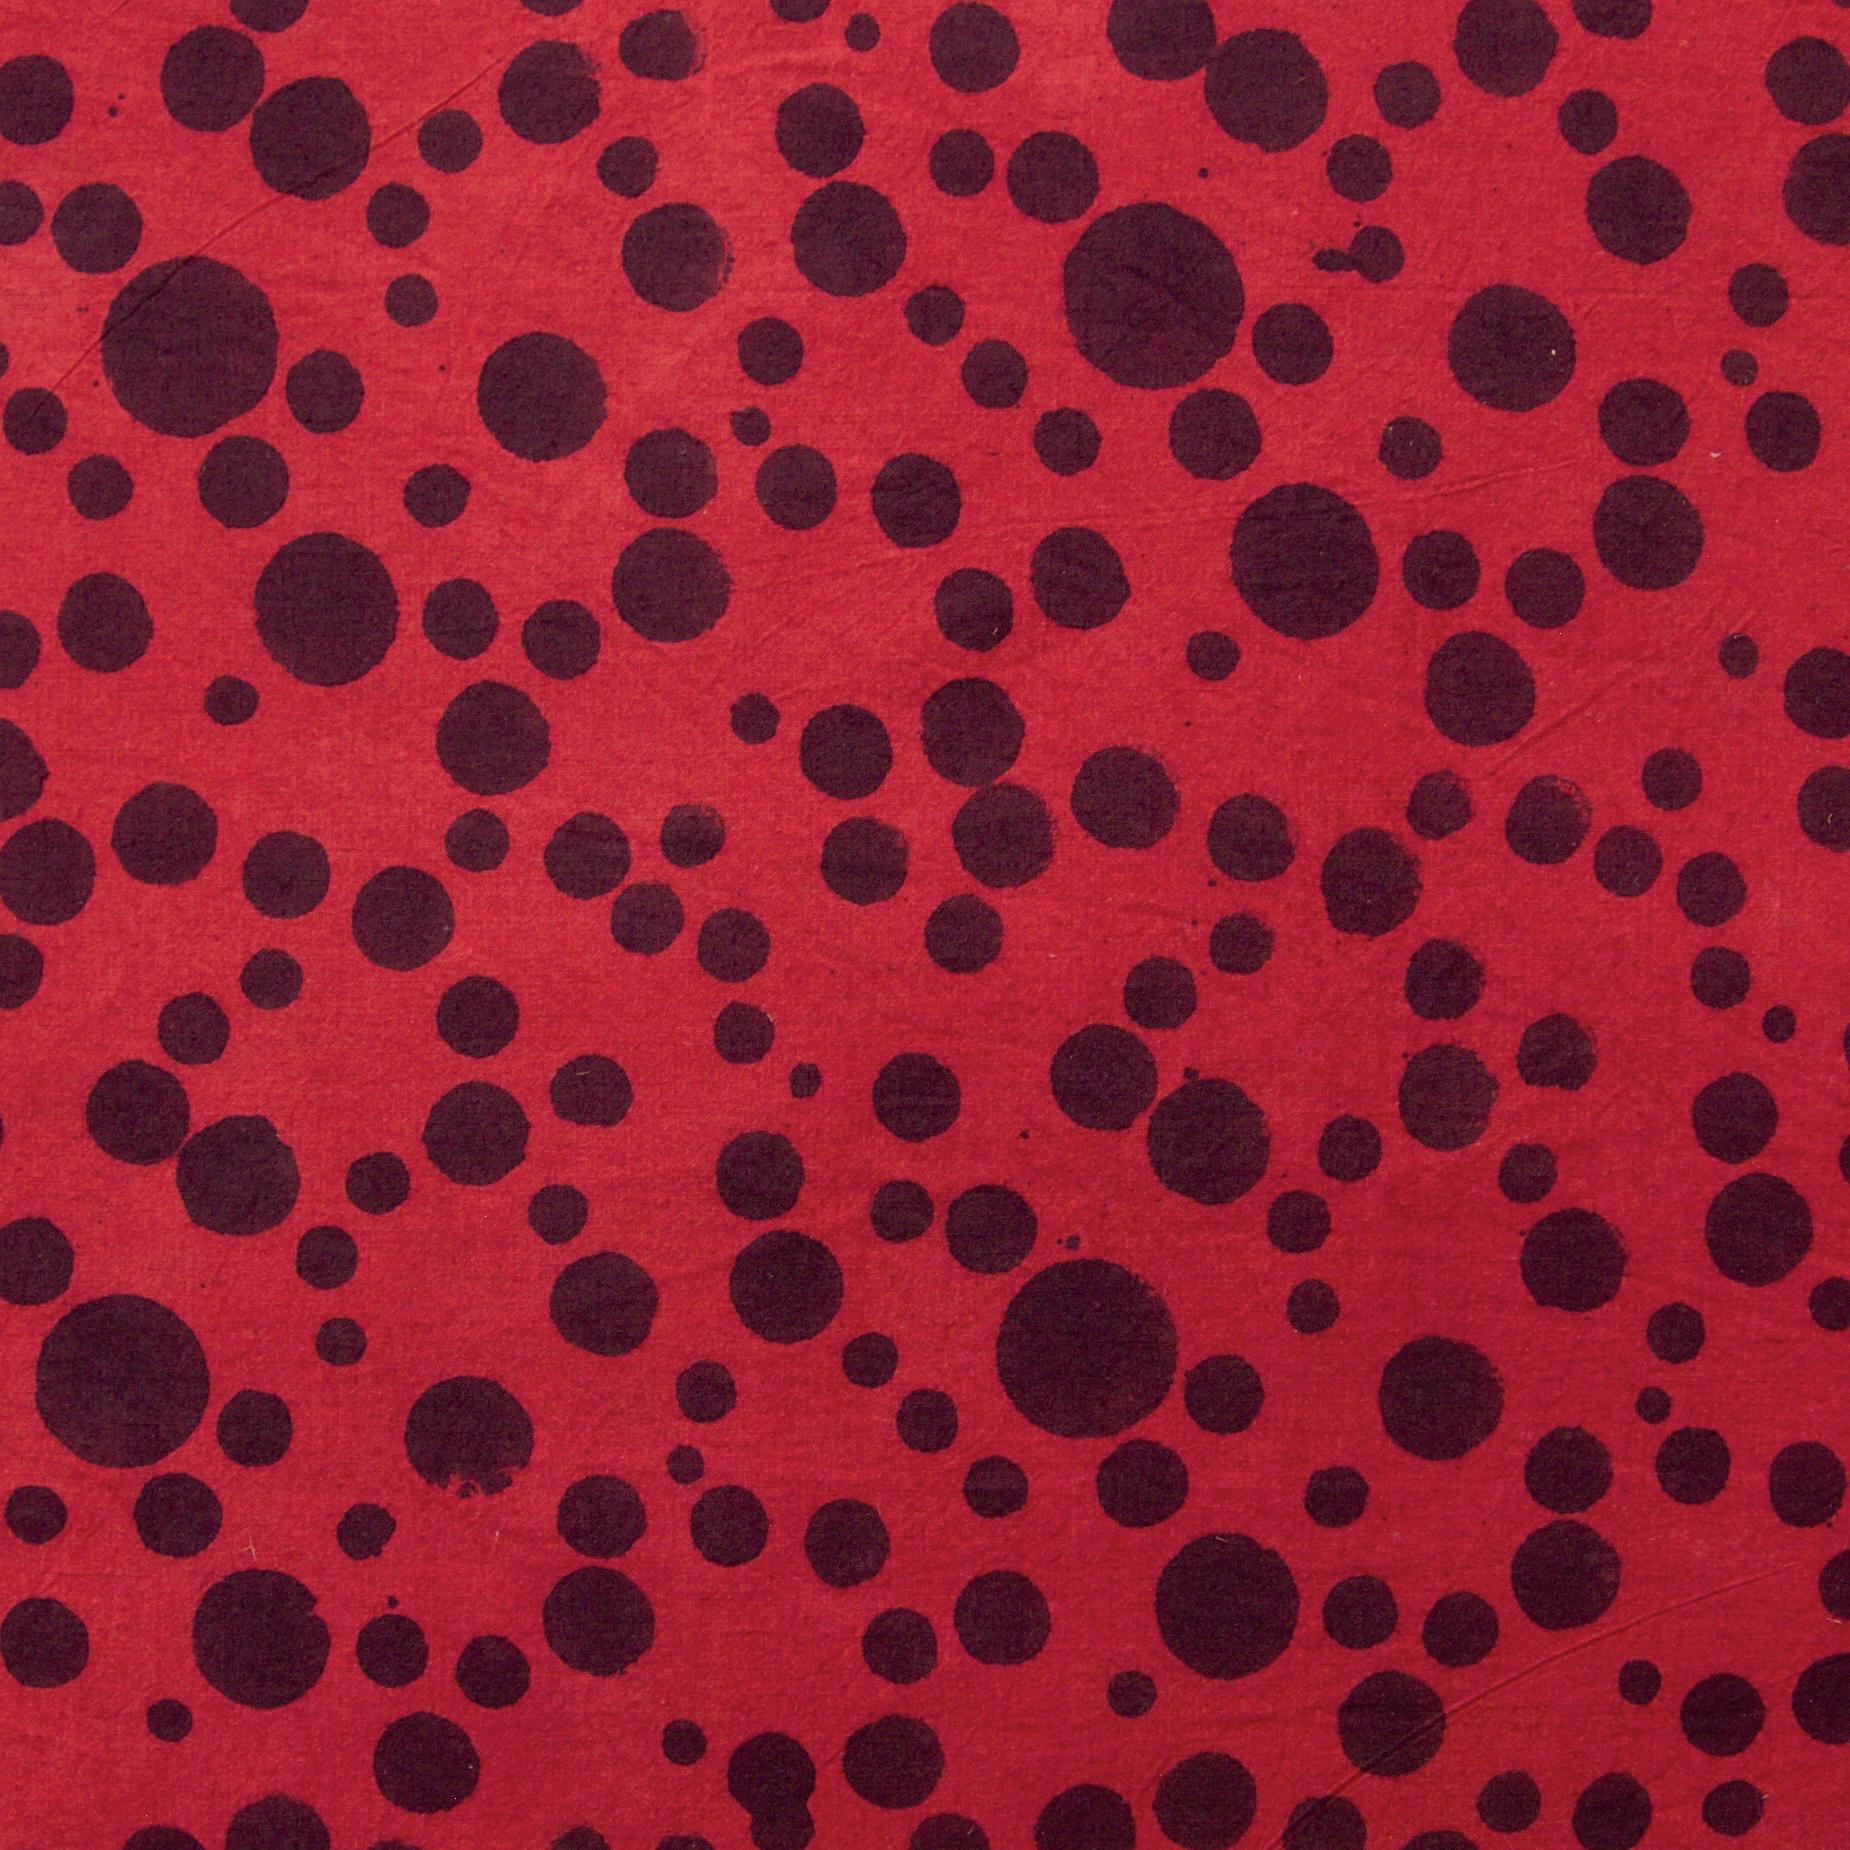 100% Block-Printed Cotton Fabric From India- Ajrak - Alizarin Black Dots Print